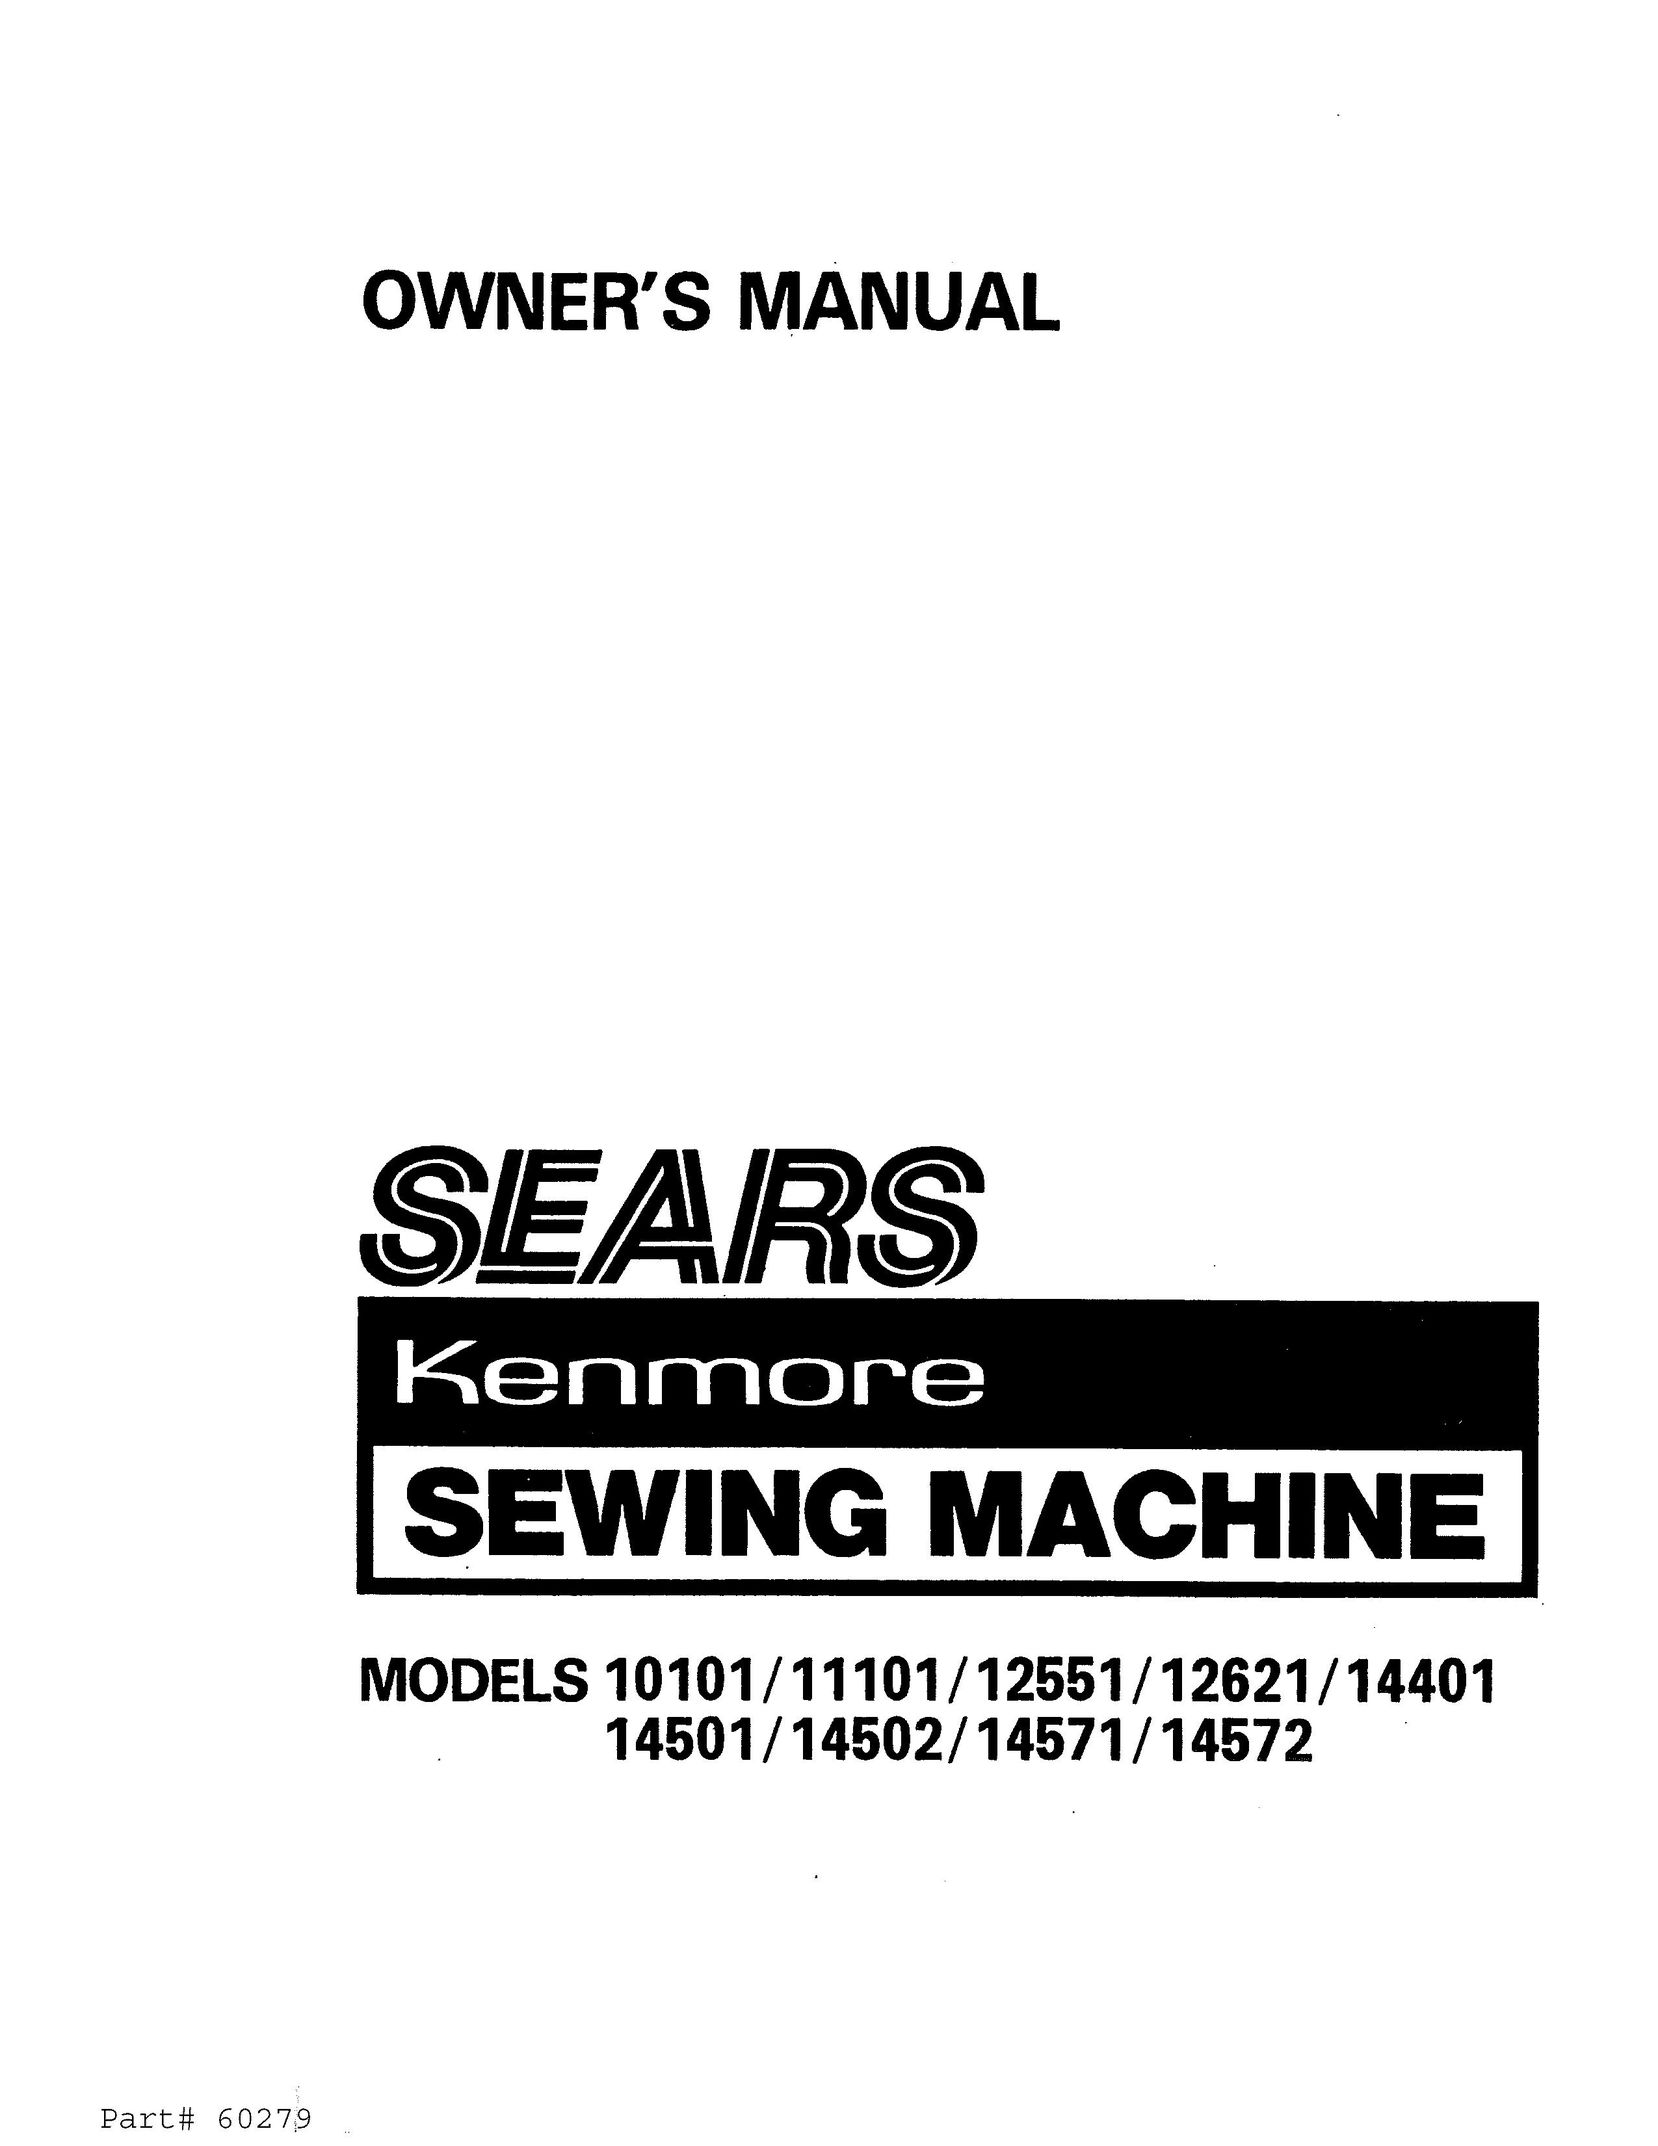 Kenmore 14572 Sewing Machine User Manual